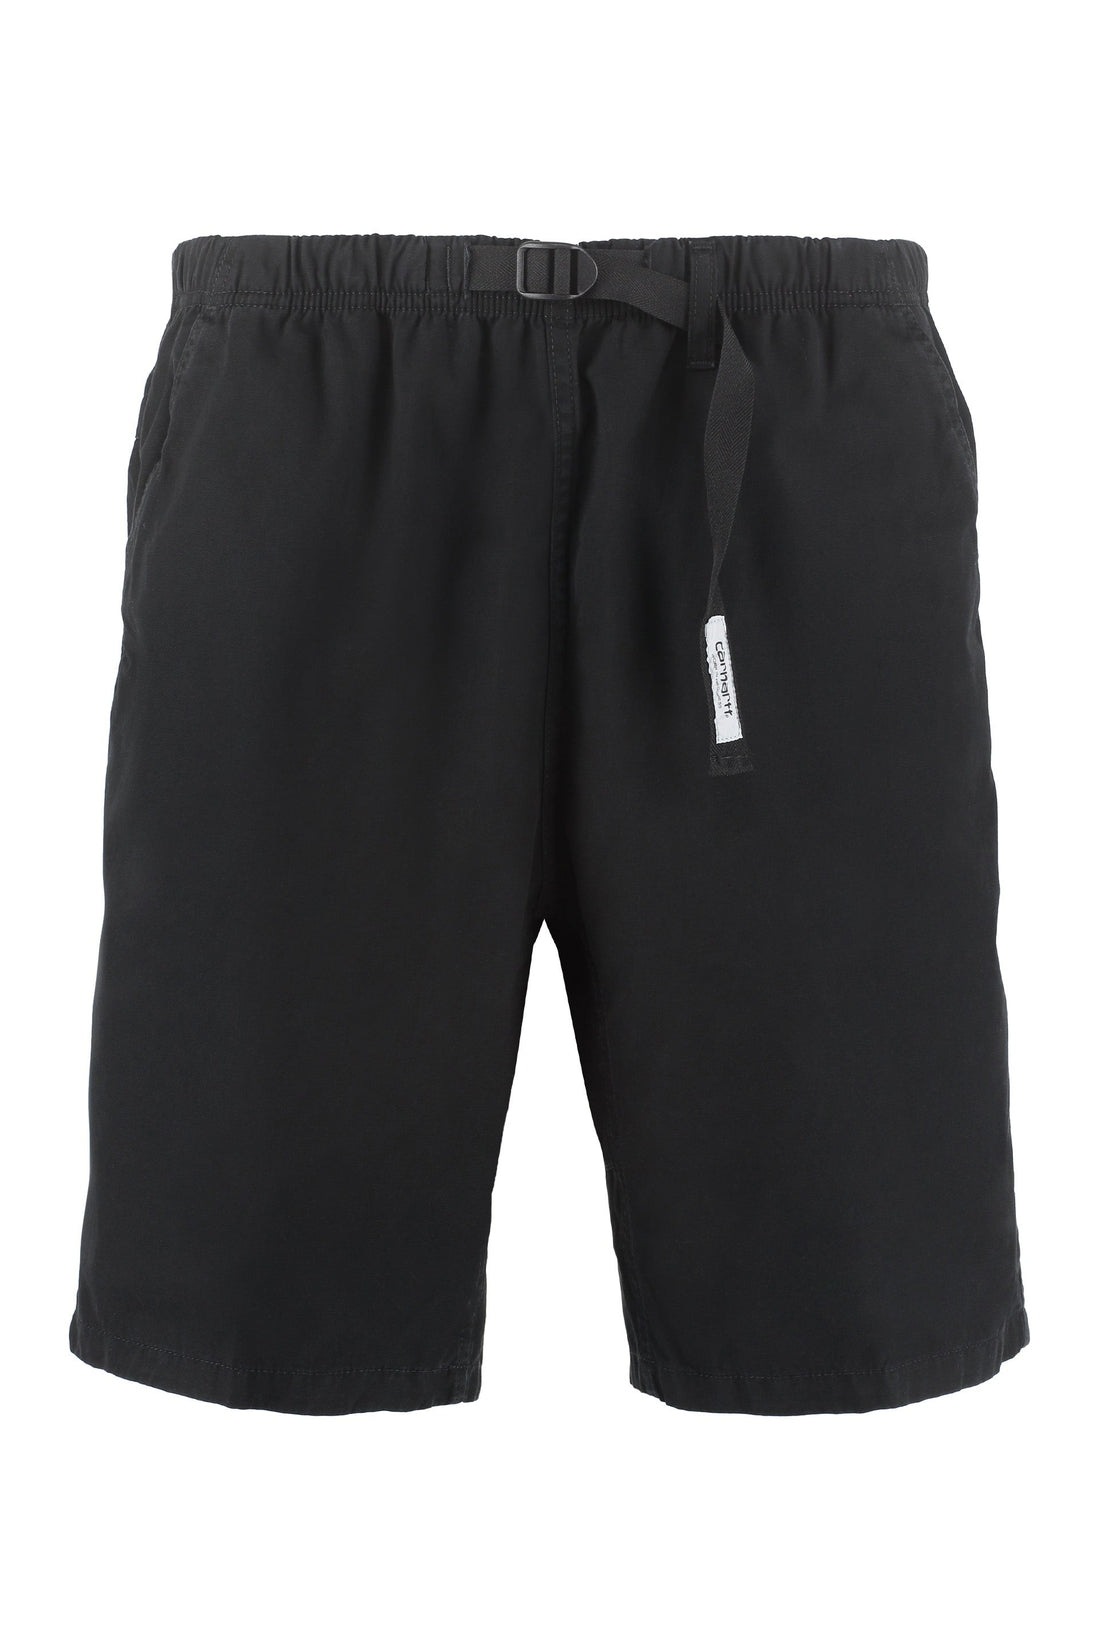 Carhartt-OUTLET-SALE-Clover cotton bermuda shorts-ARCHIVIST